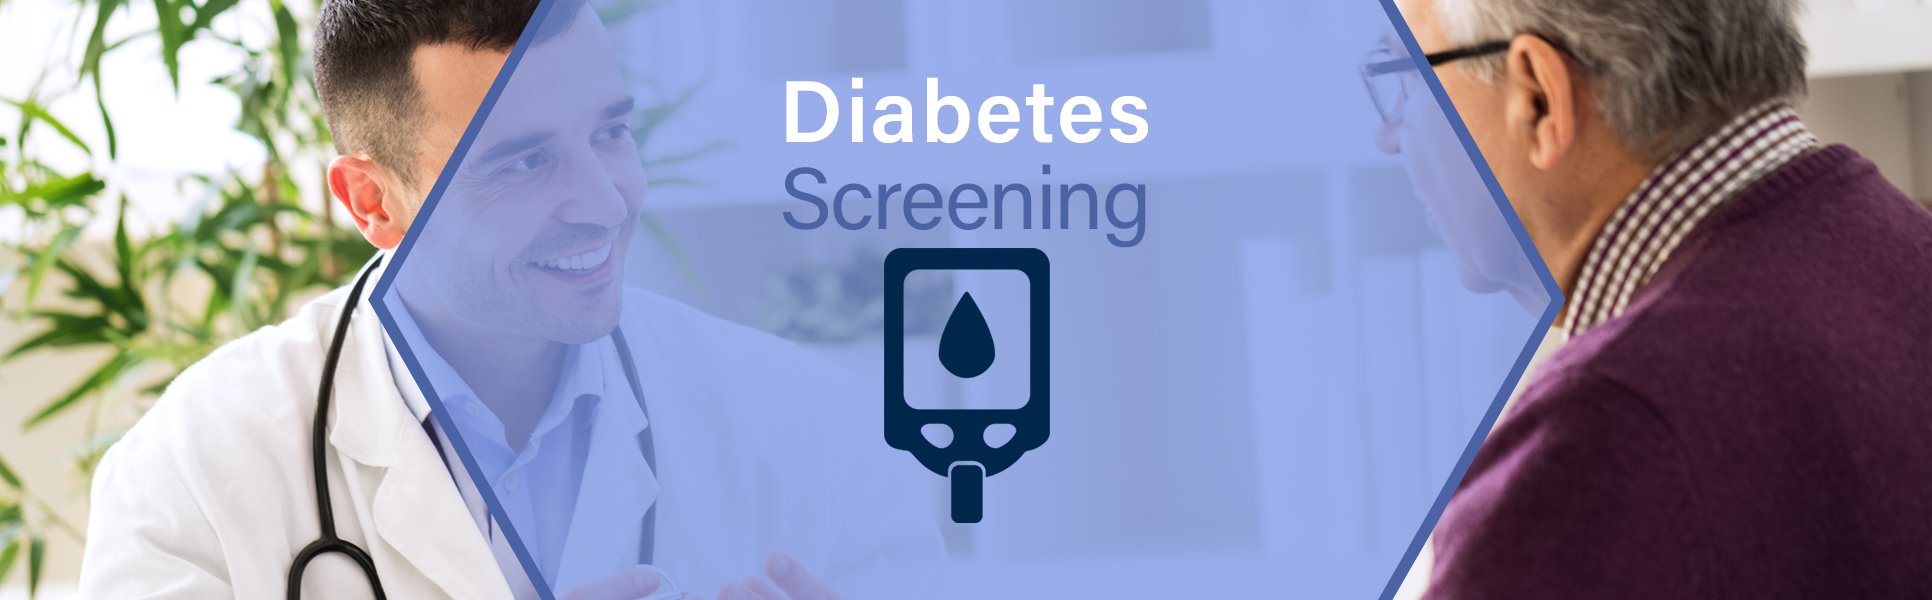 Diabetes Screening | DOHC